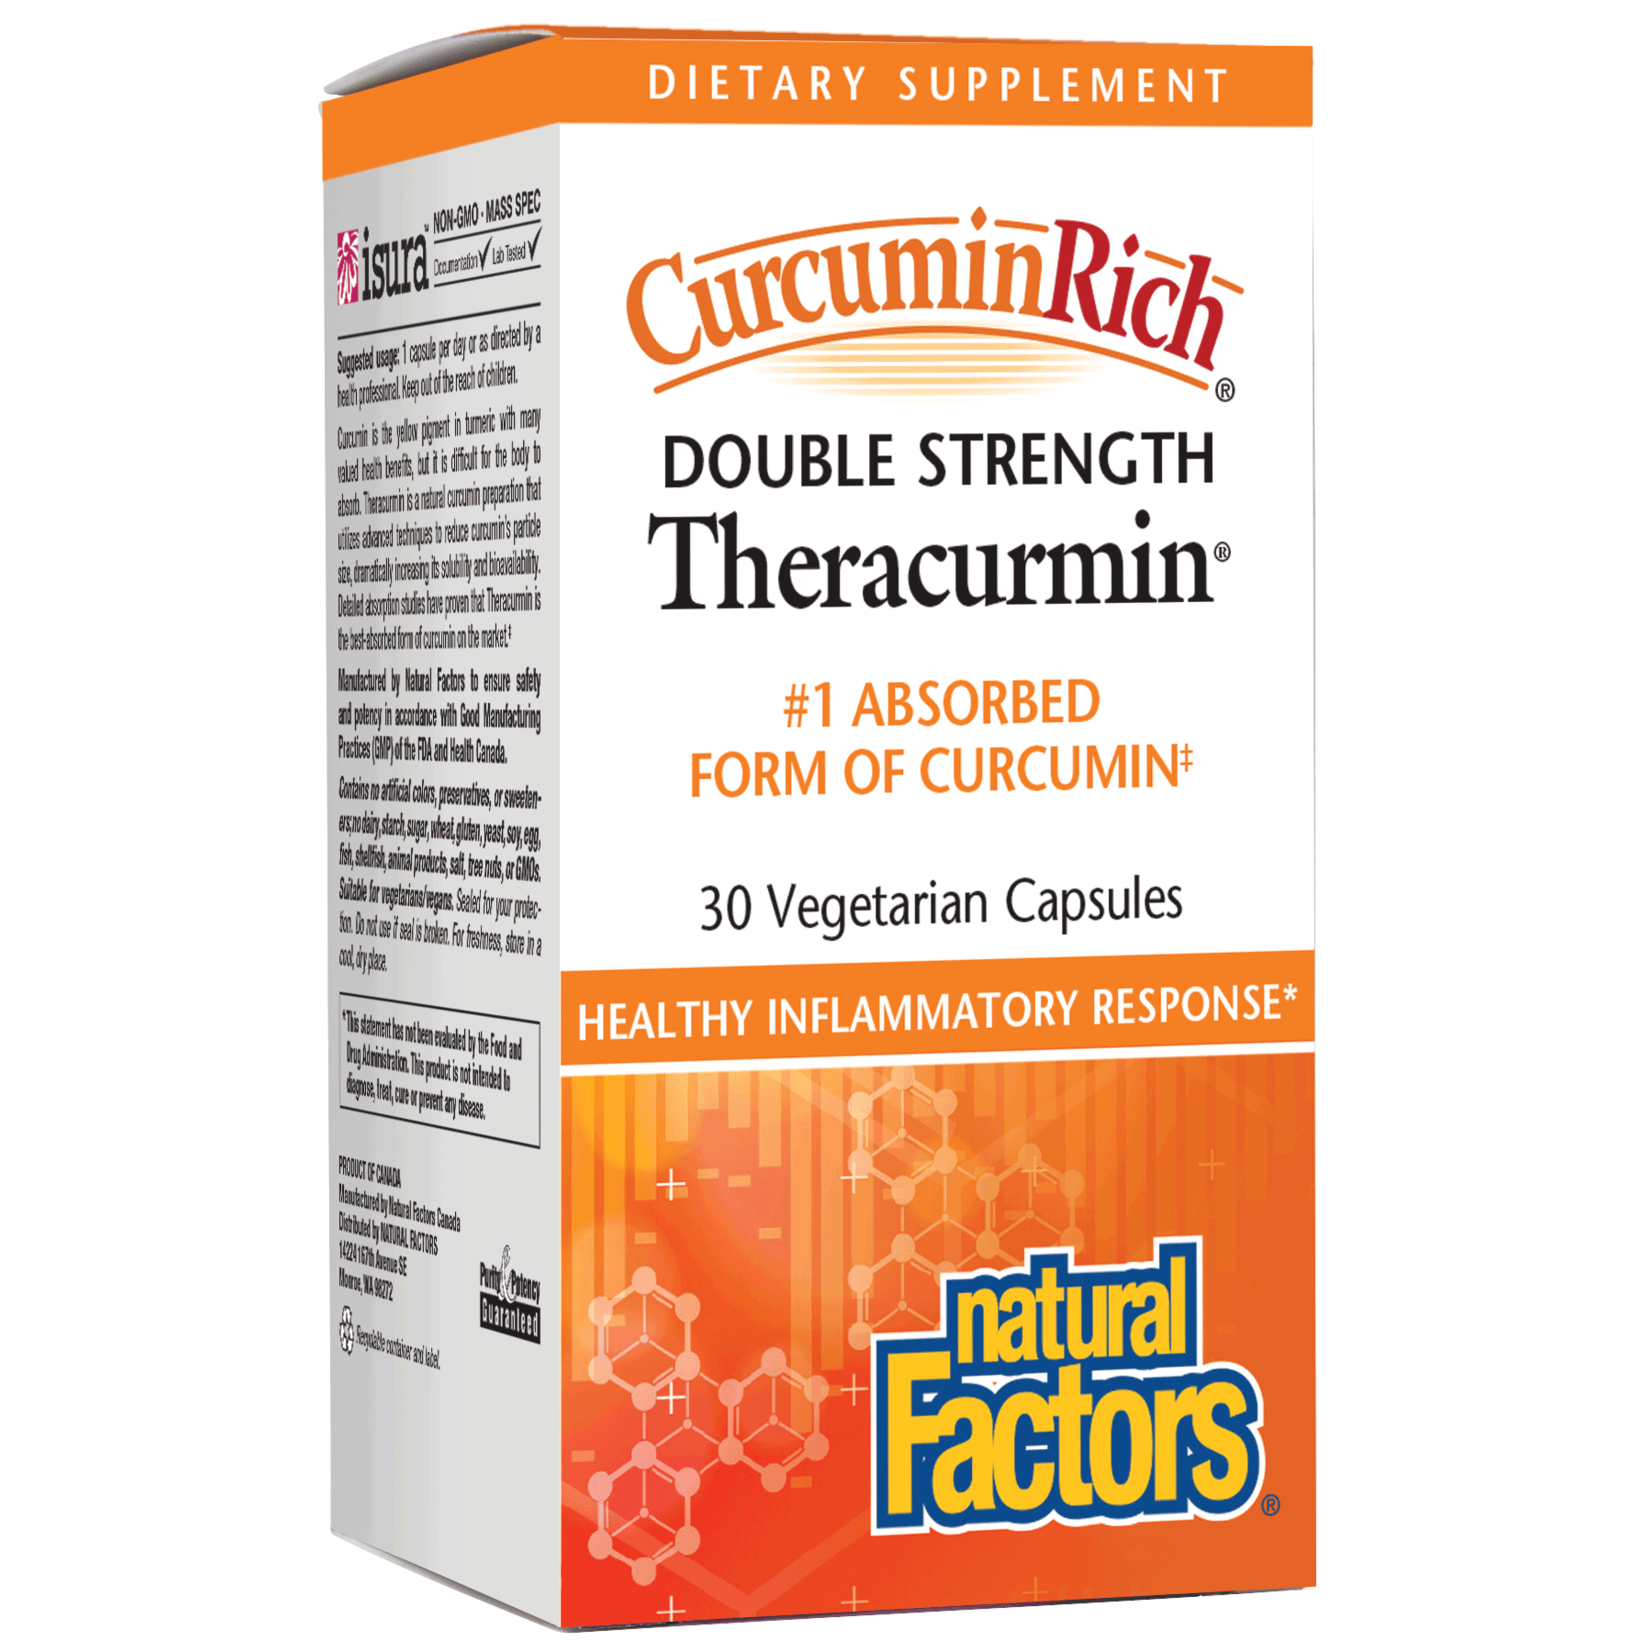 Natural Factors Natural Factors - Curcuminrich Double Strength Theracurmin - 30 Veg Capsules